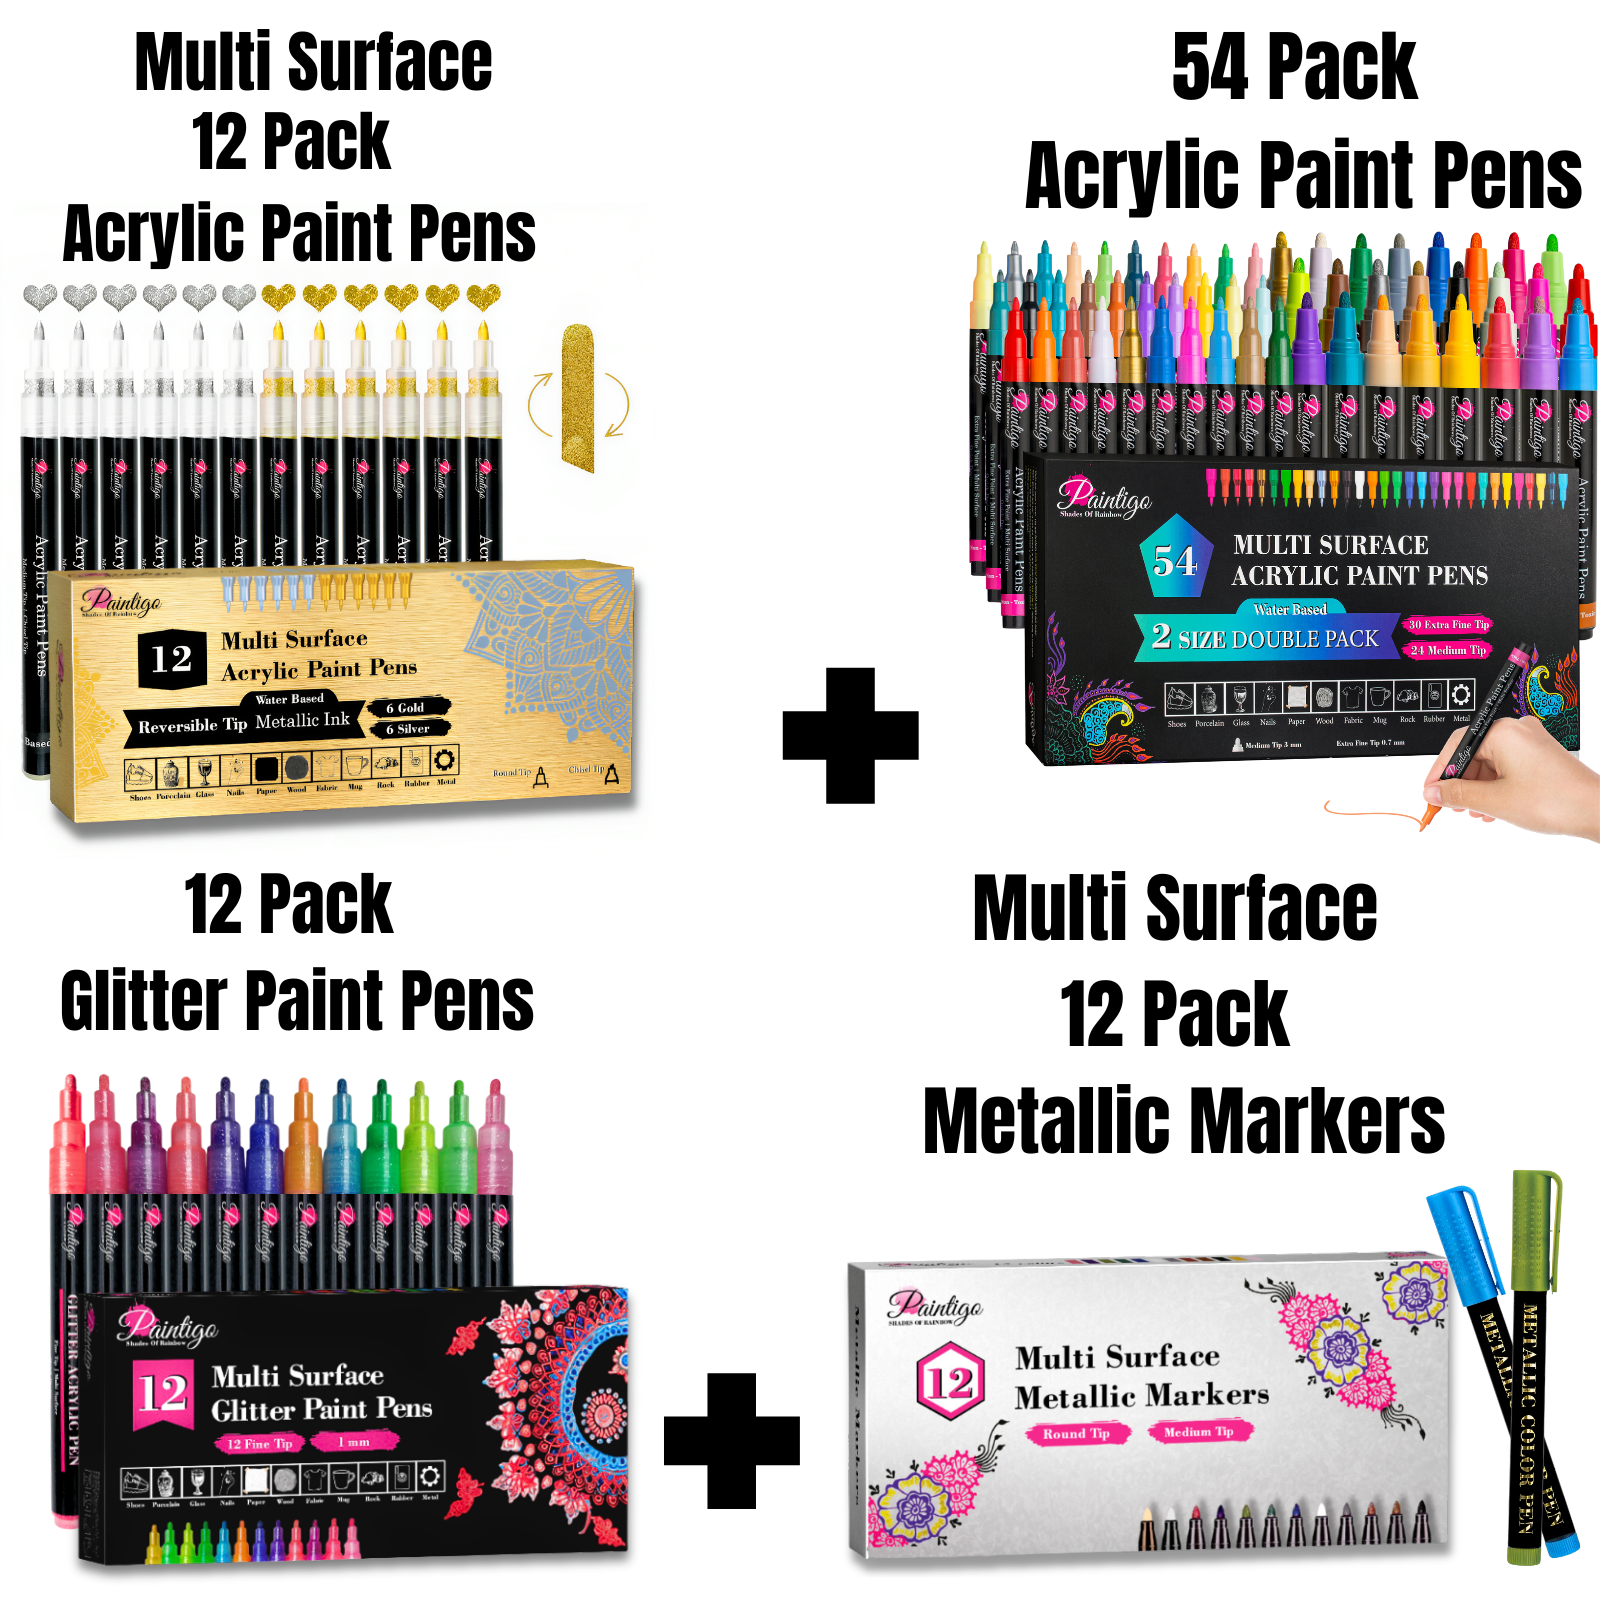 Acrylic Paint Marker Pens - Variety Pack of 6, Extra Fine & Medium